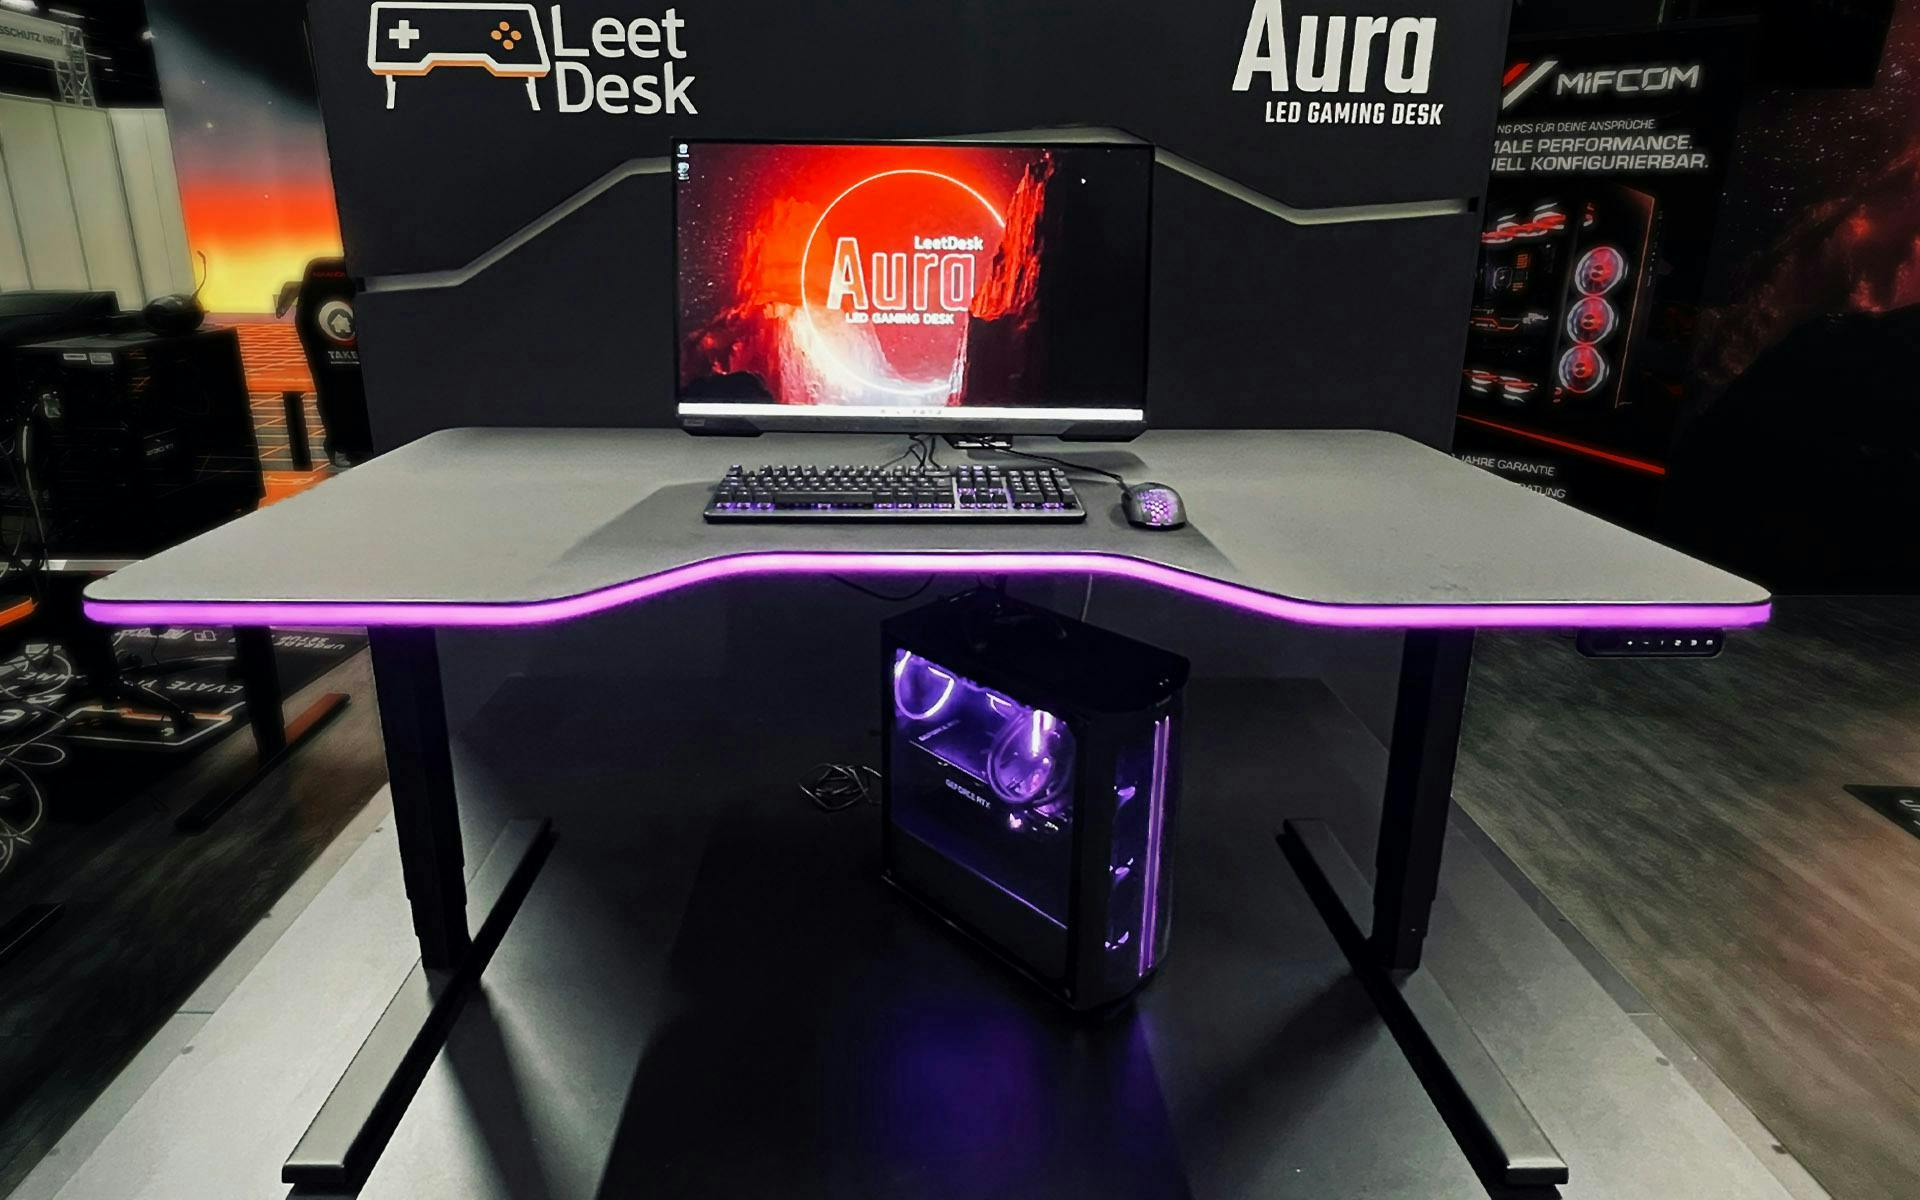 Gaming desk with integrated LED lighting | Credit: LeetDesk